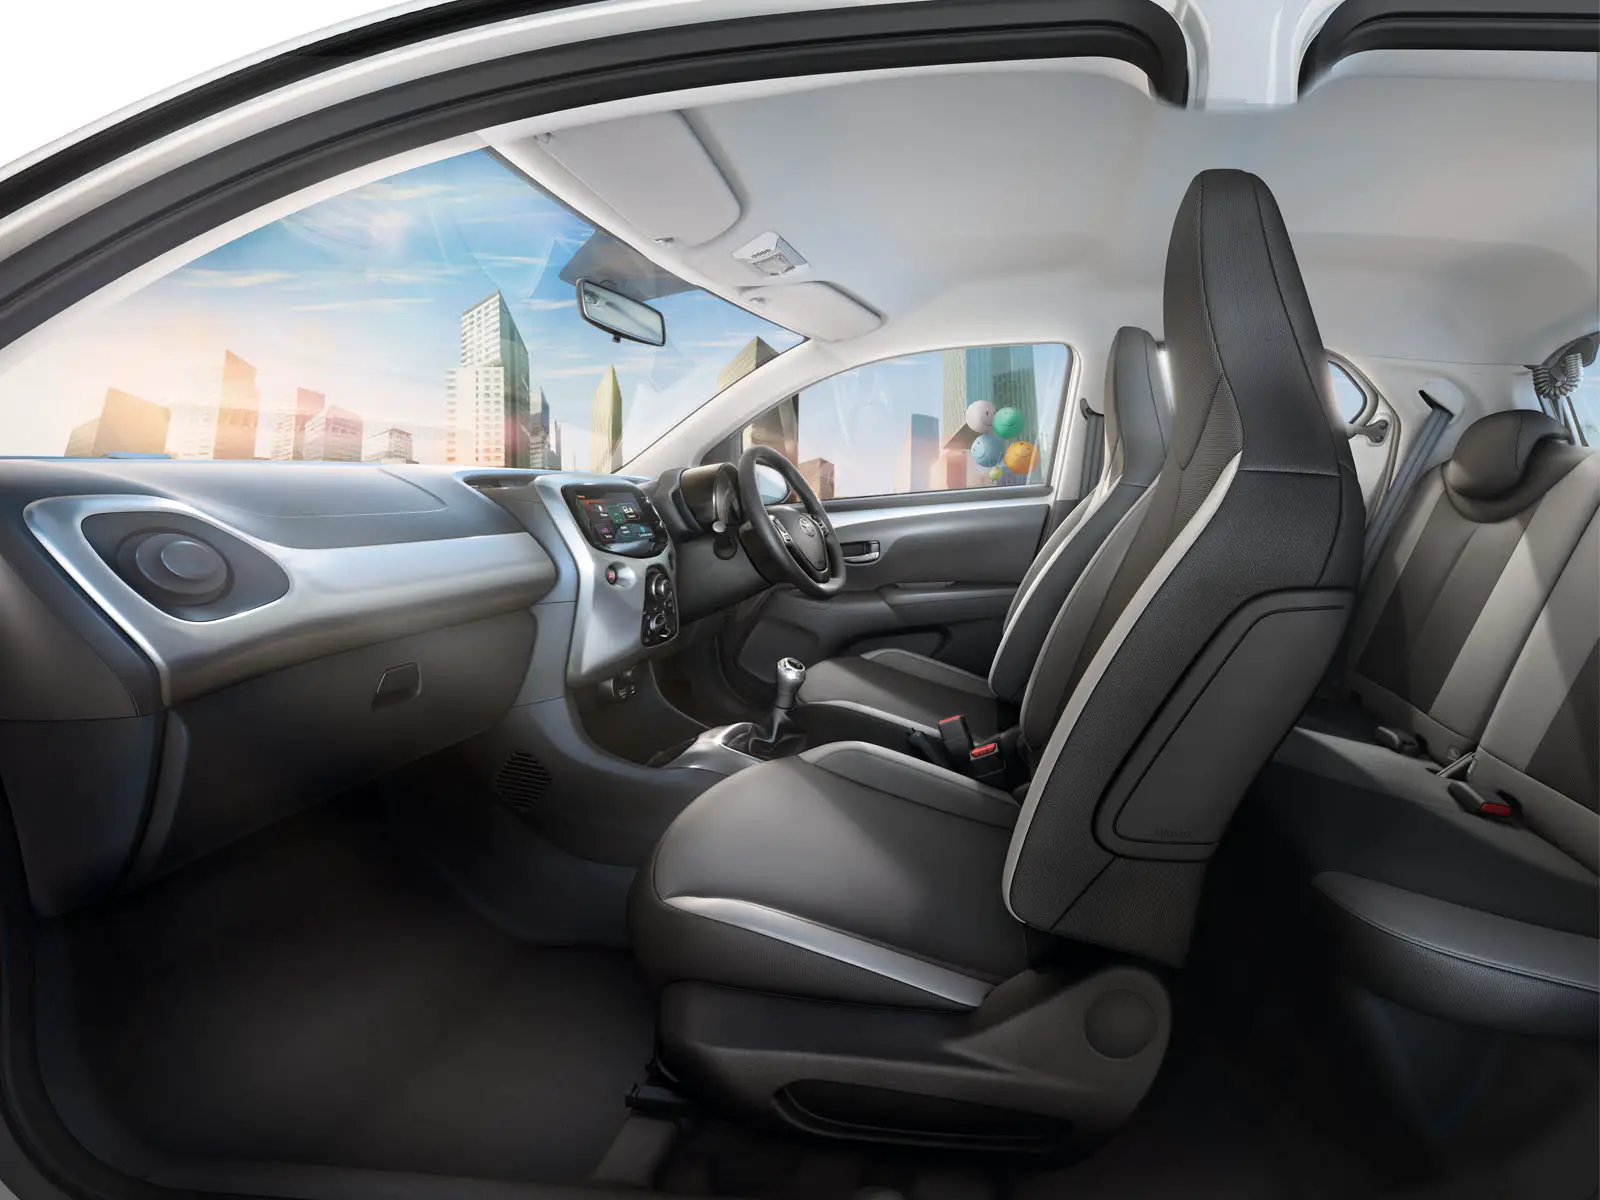 Toyata Aygo X- Clusive 2017 interior front seat view